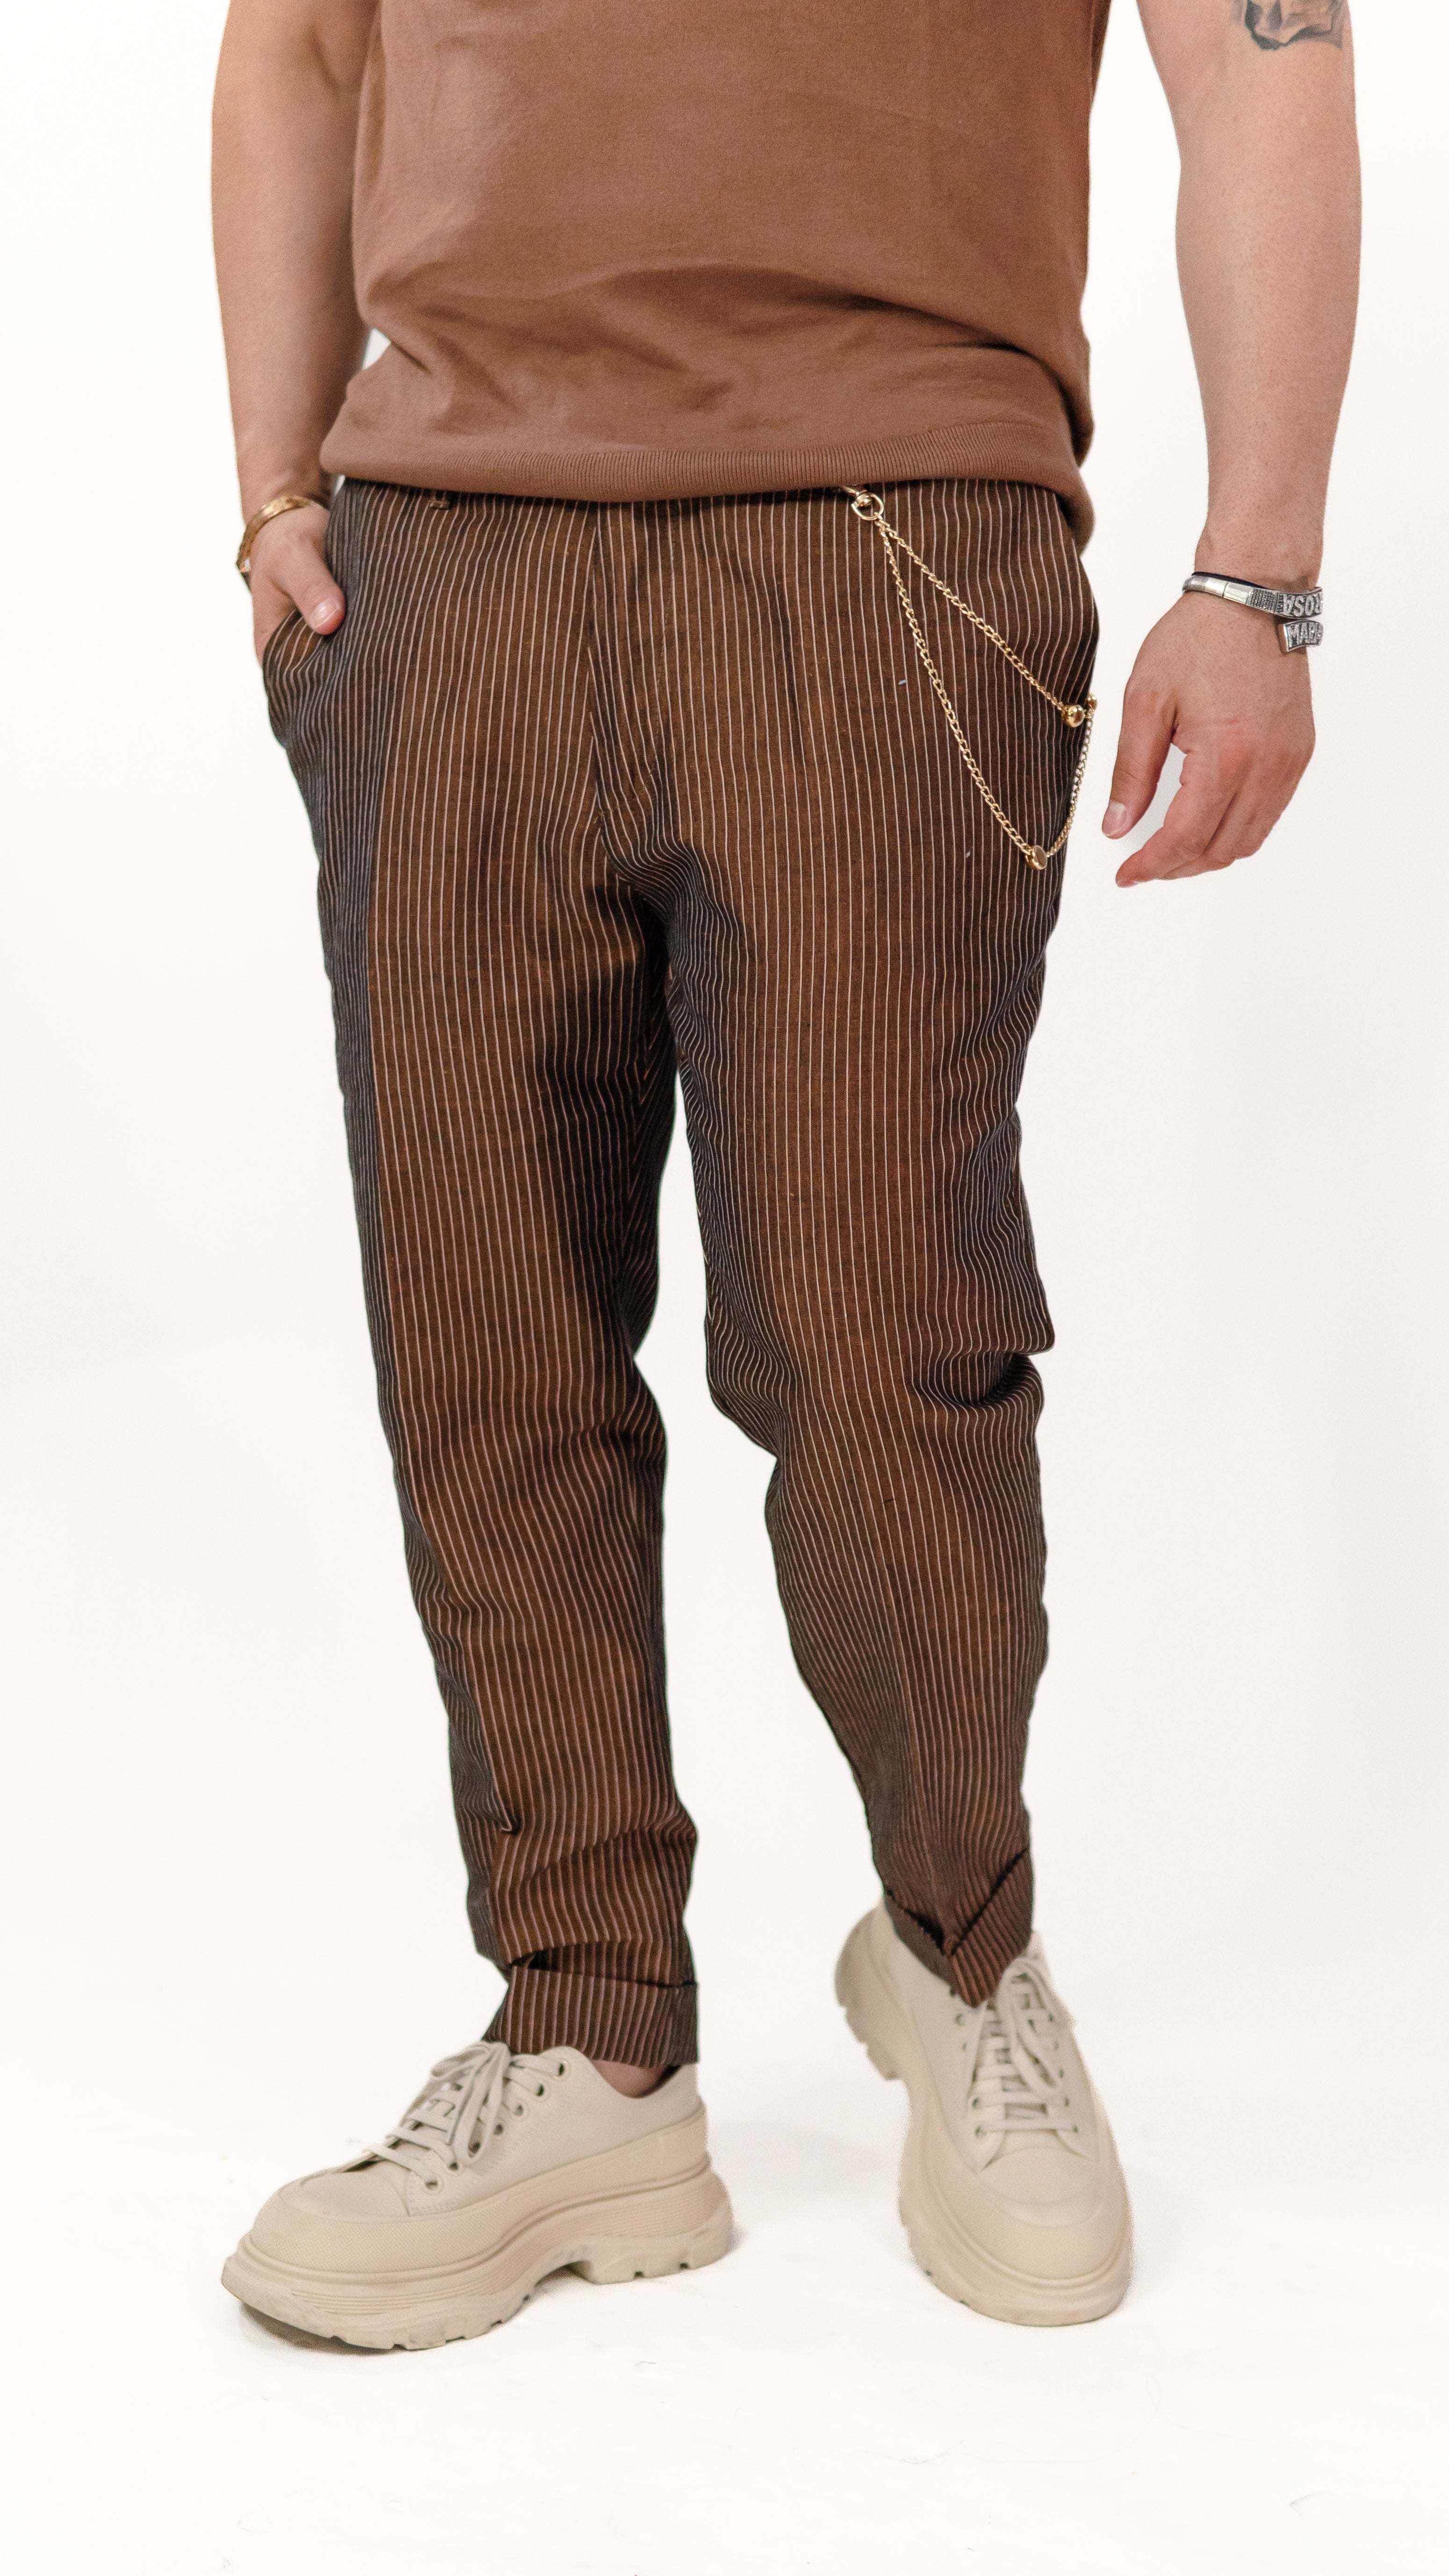 Pantaloni barbati maro cu lant auriu